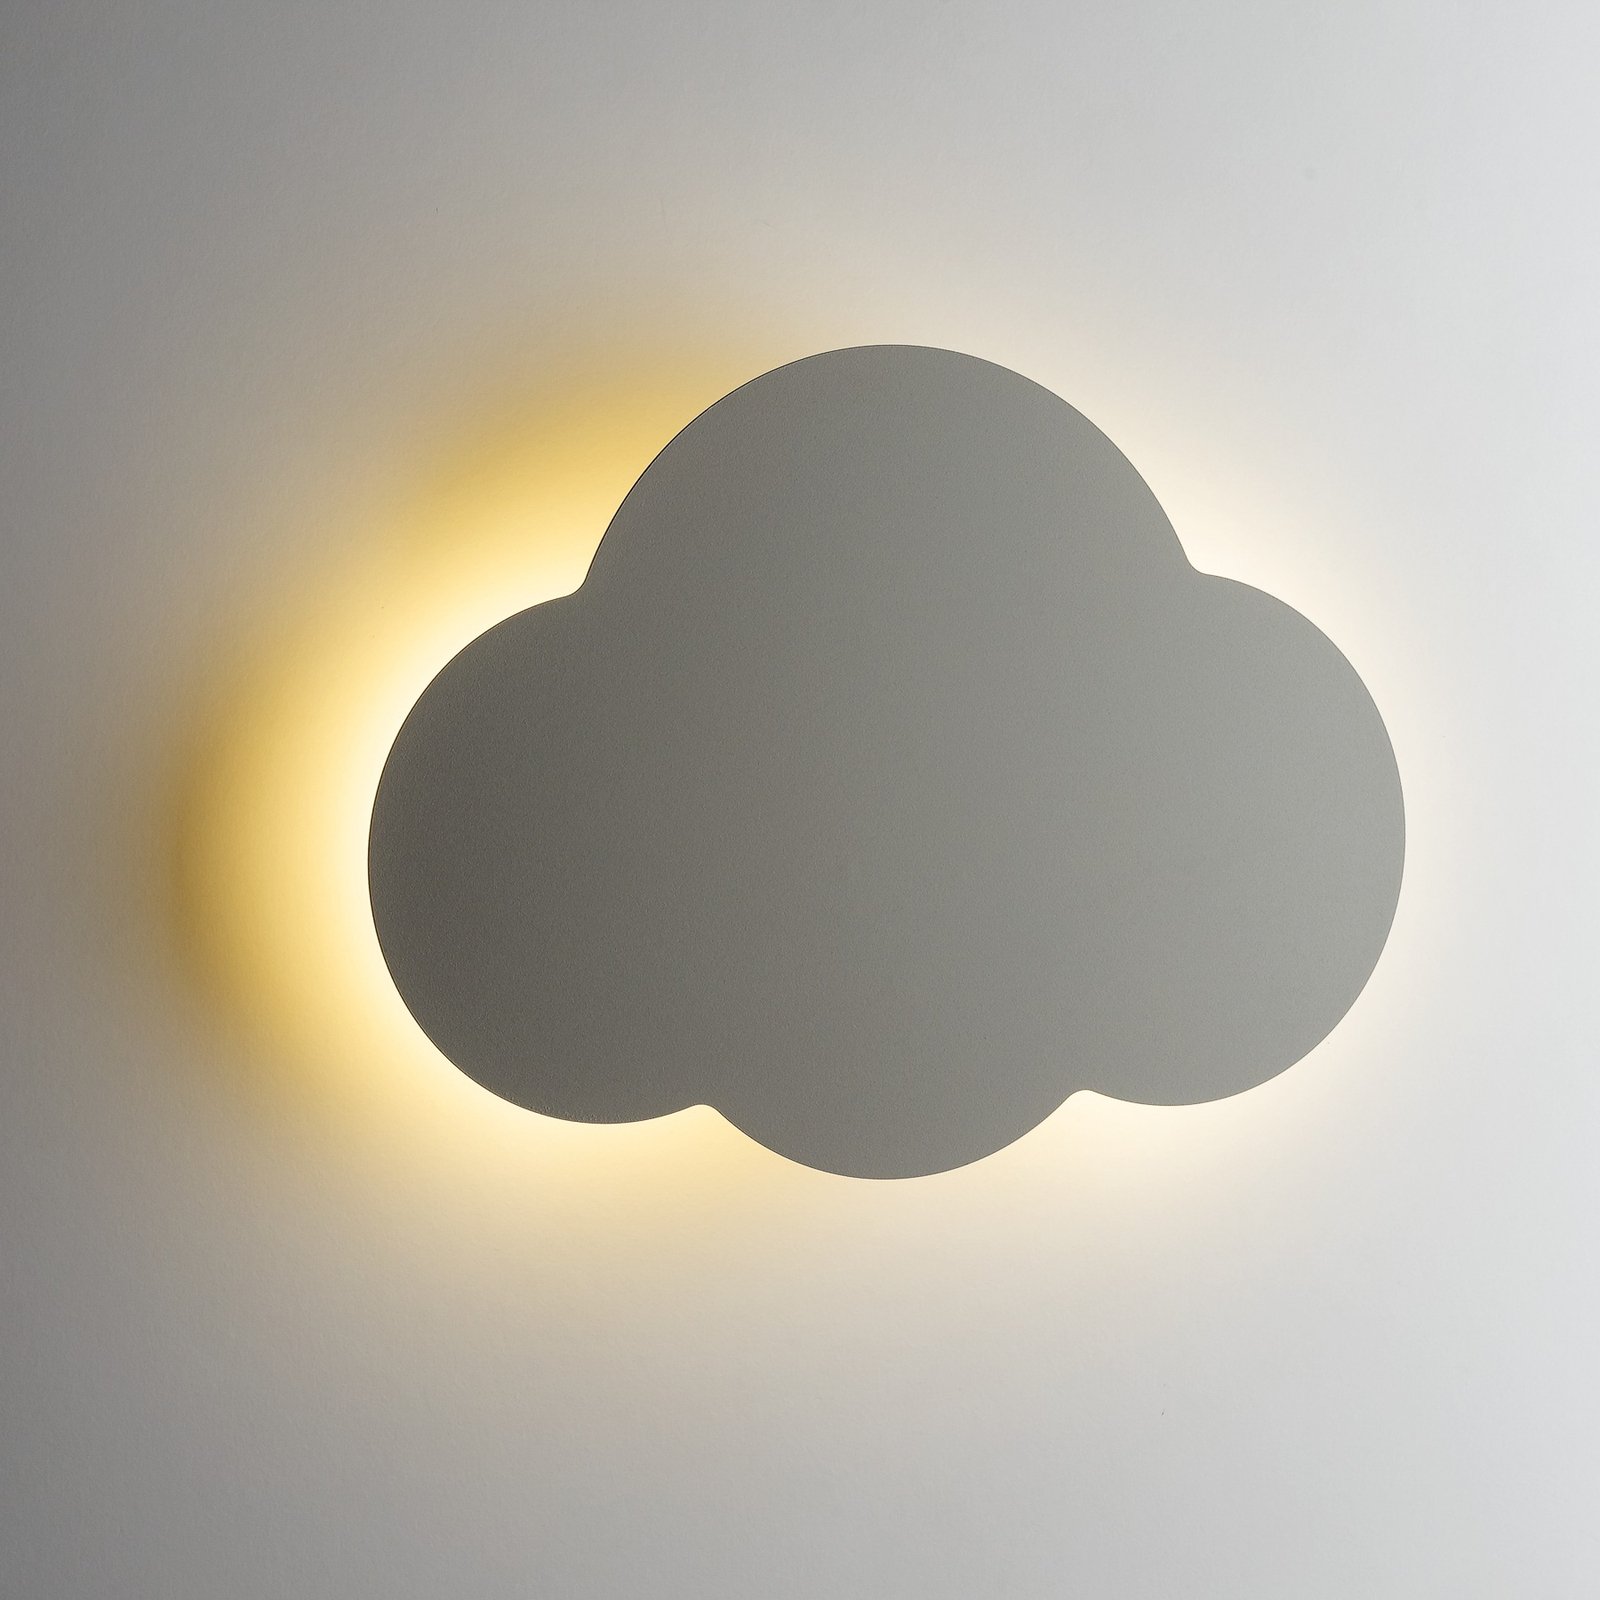 Cloud vegglampe, beige, stål, indirekte lys, 38 x 27 cm